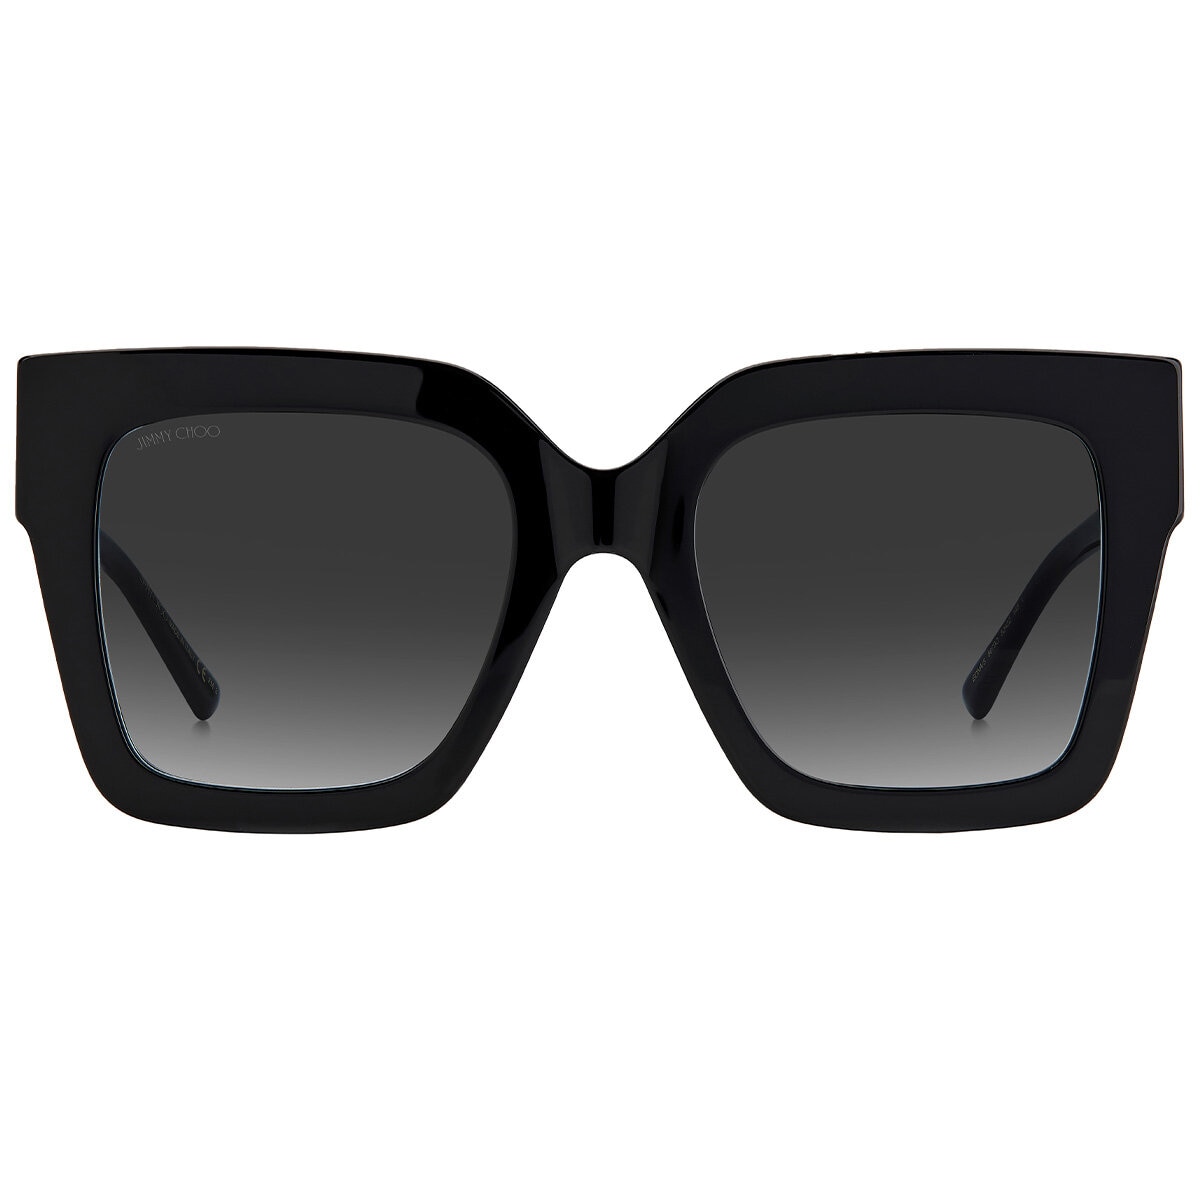 Jimmy Choo Edna S Women's Sunglasses